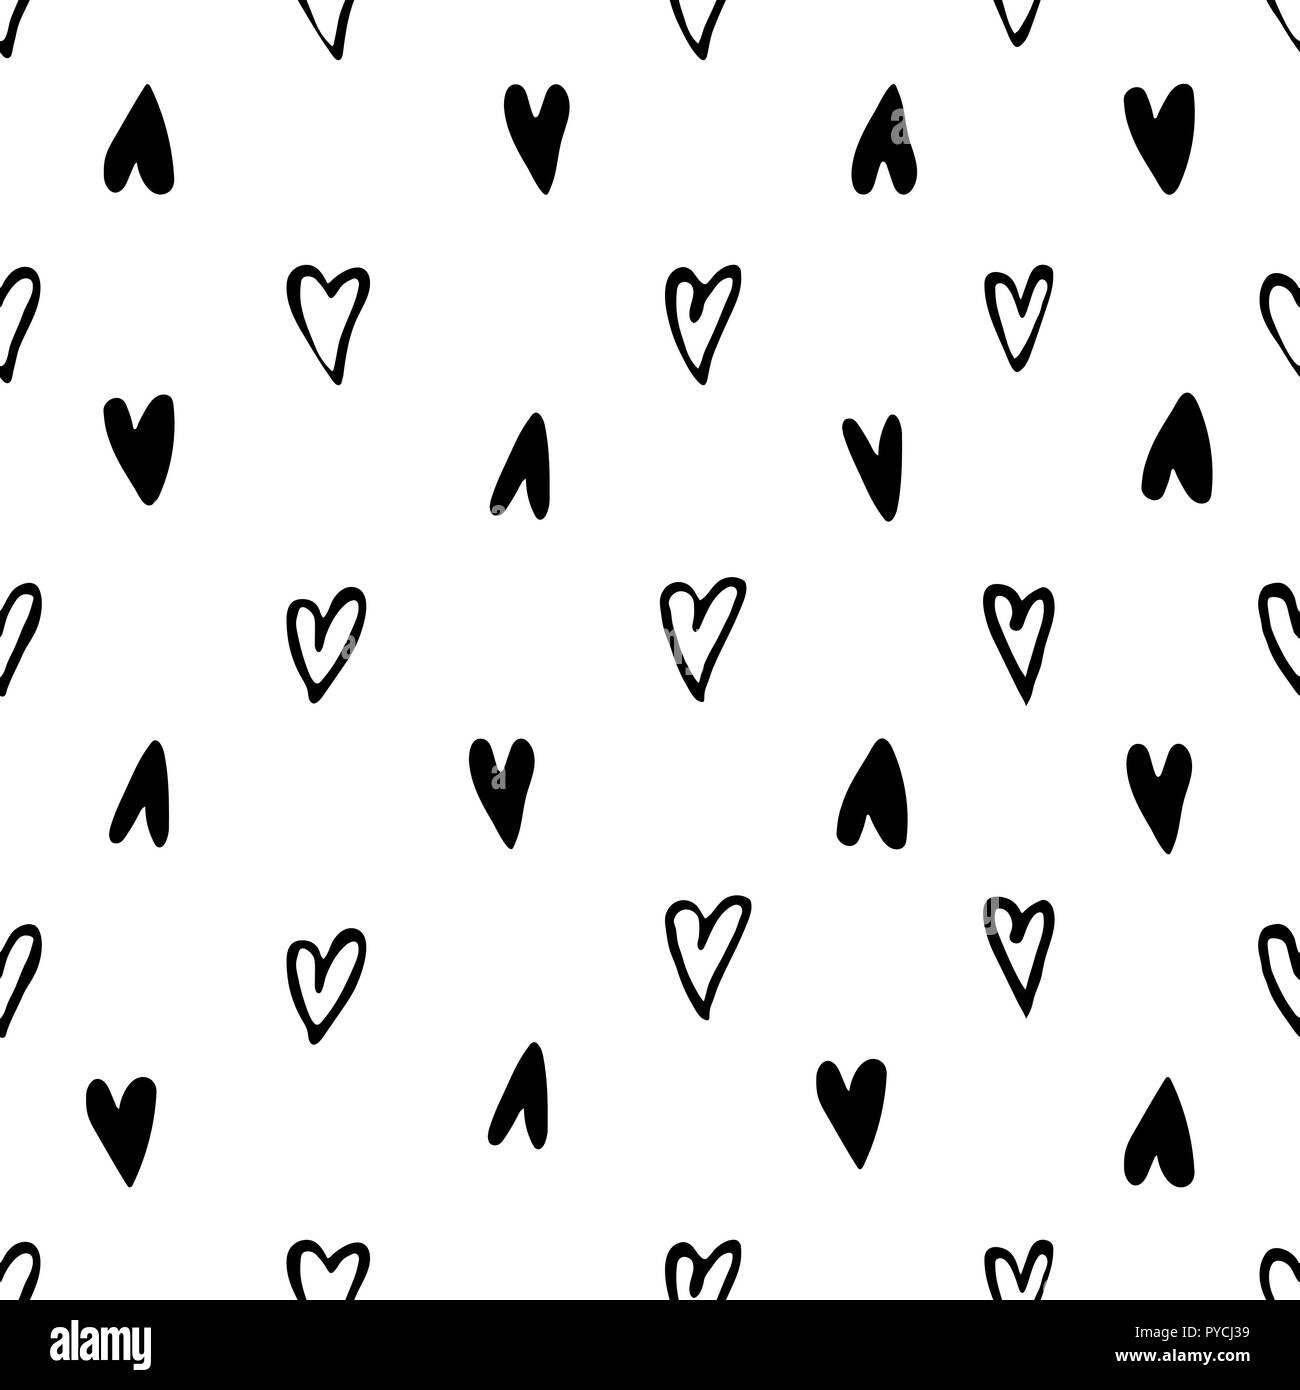 Love symbols Black and White Stock Photos & Images - Alamy